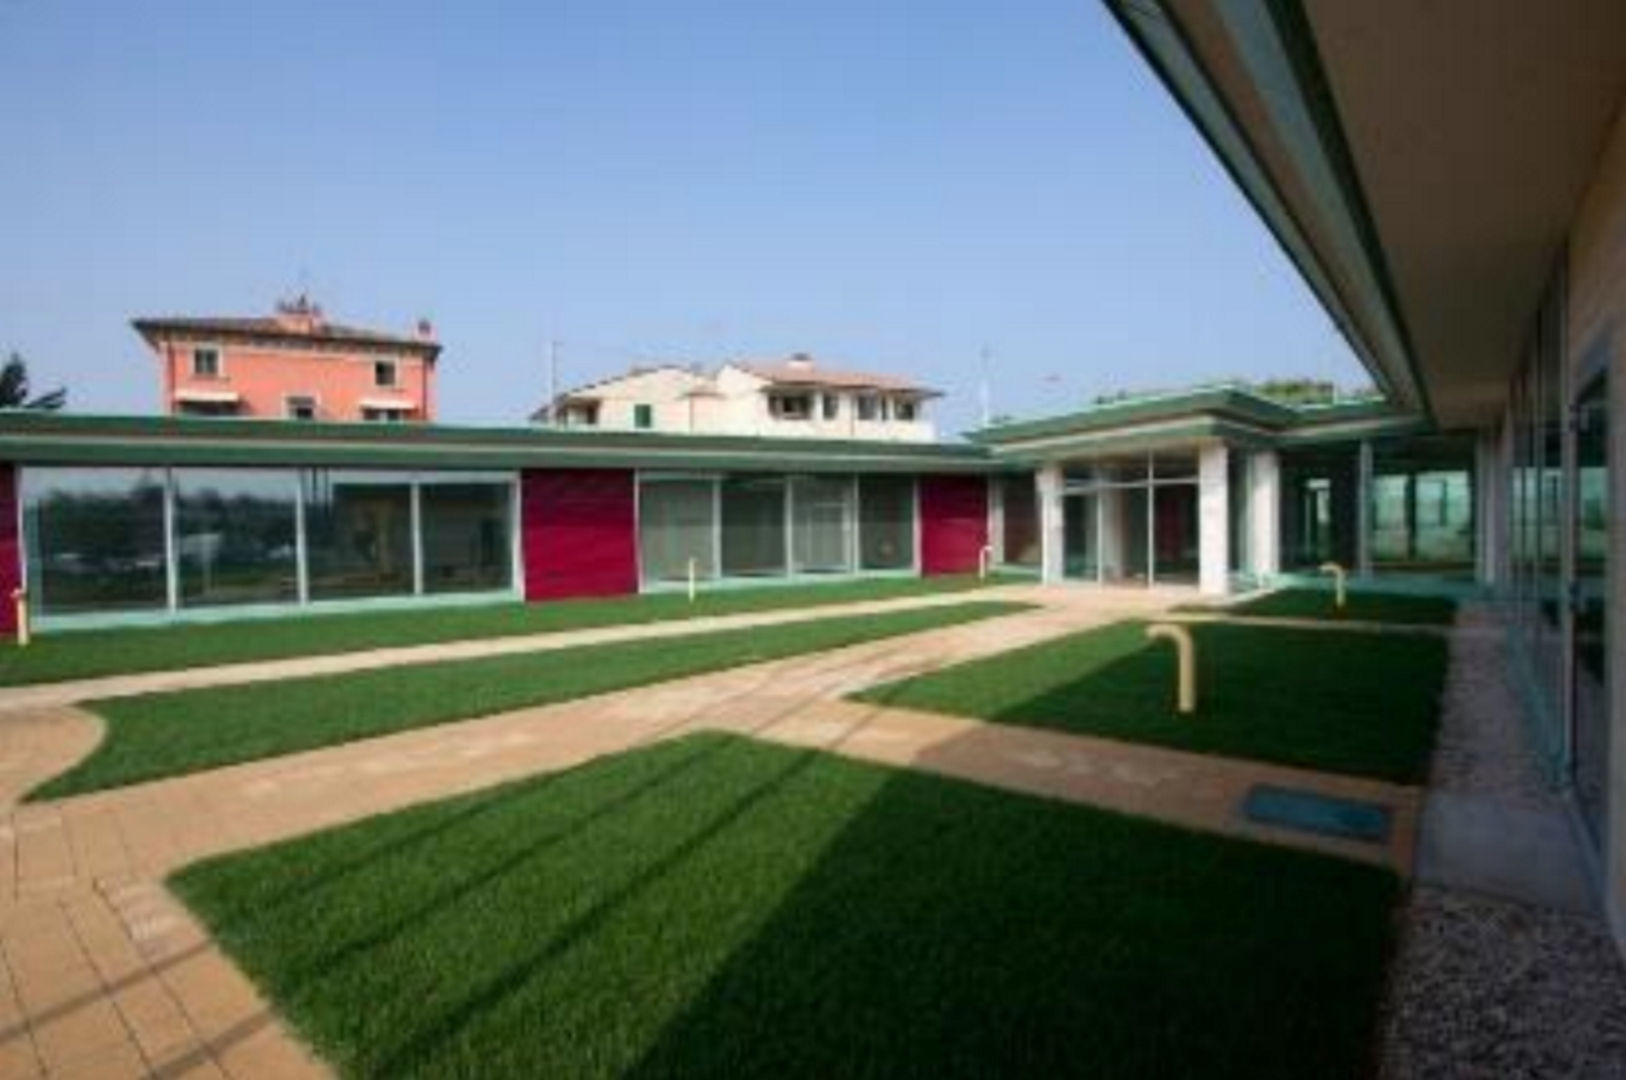 Fig. 6 - Scuola primaria, Calmasino (VR), Italia, 2014 (certificazione energetica A+, 2014)